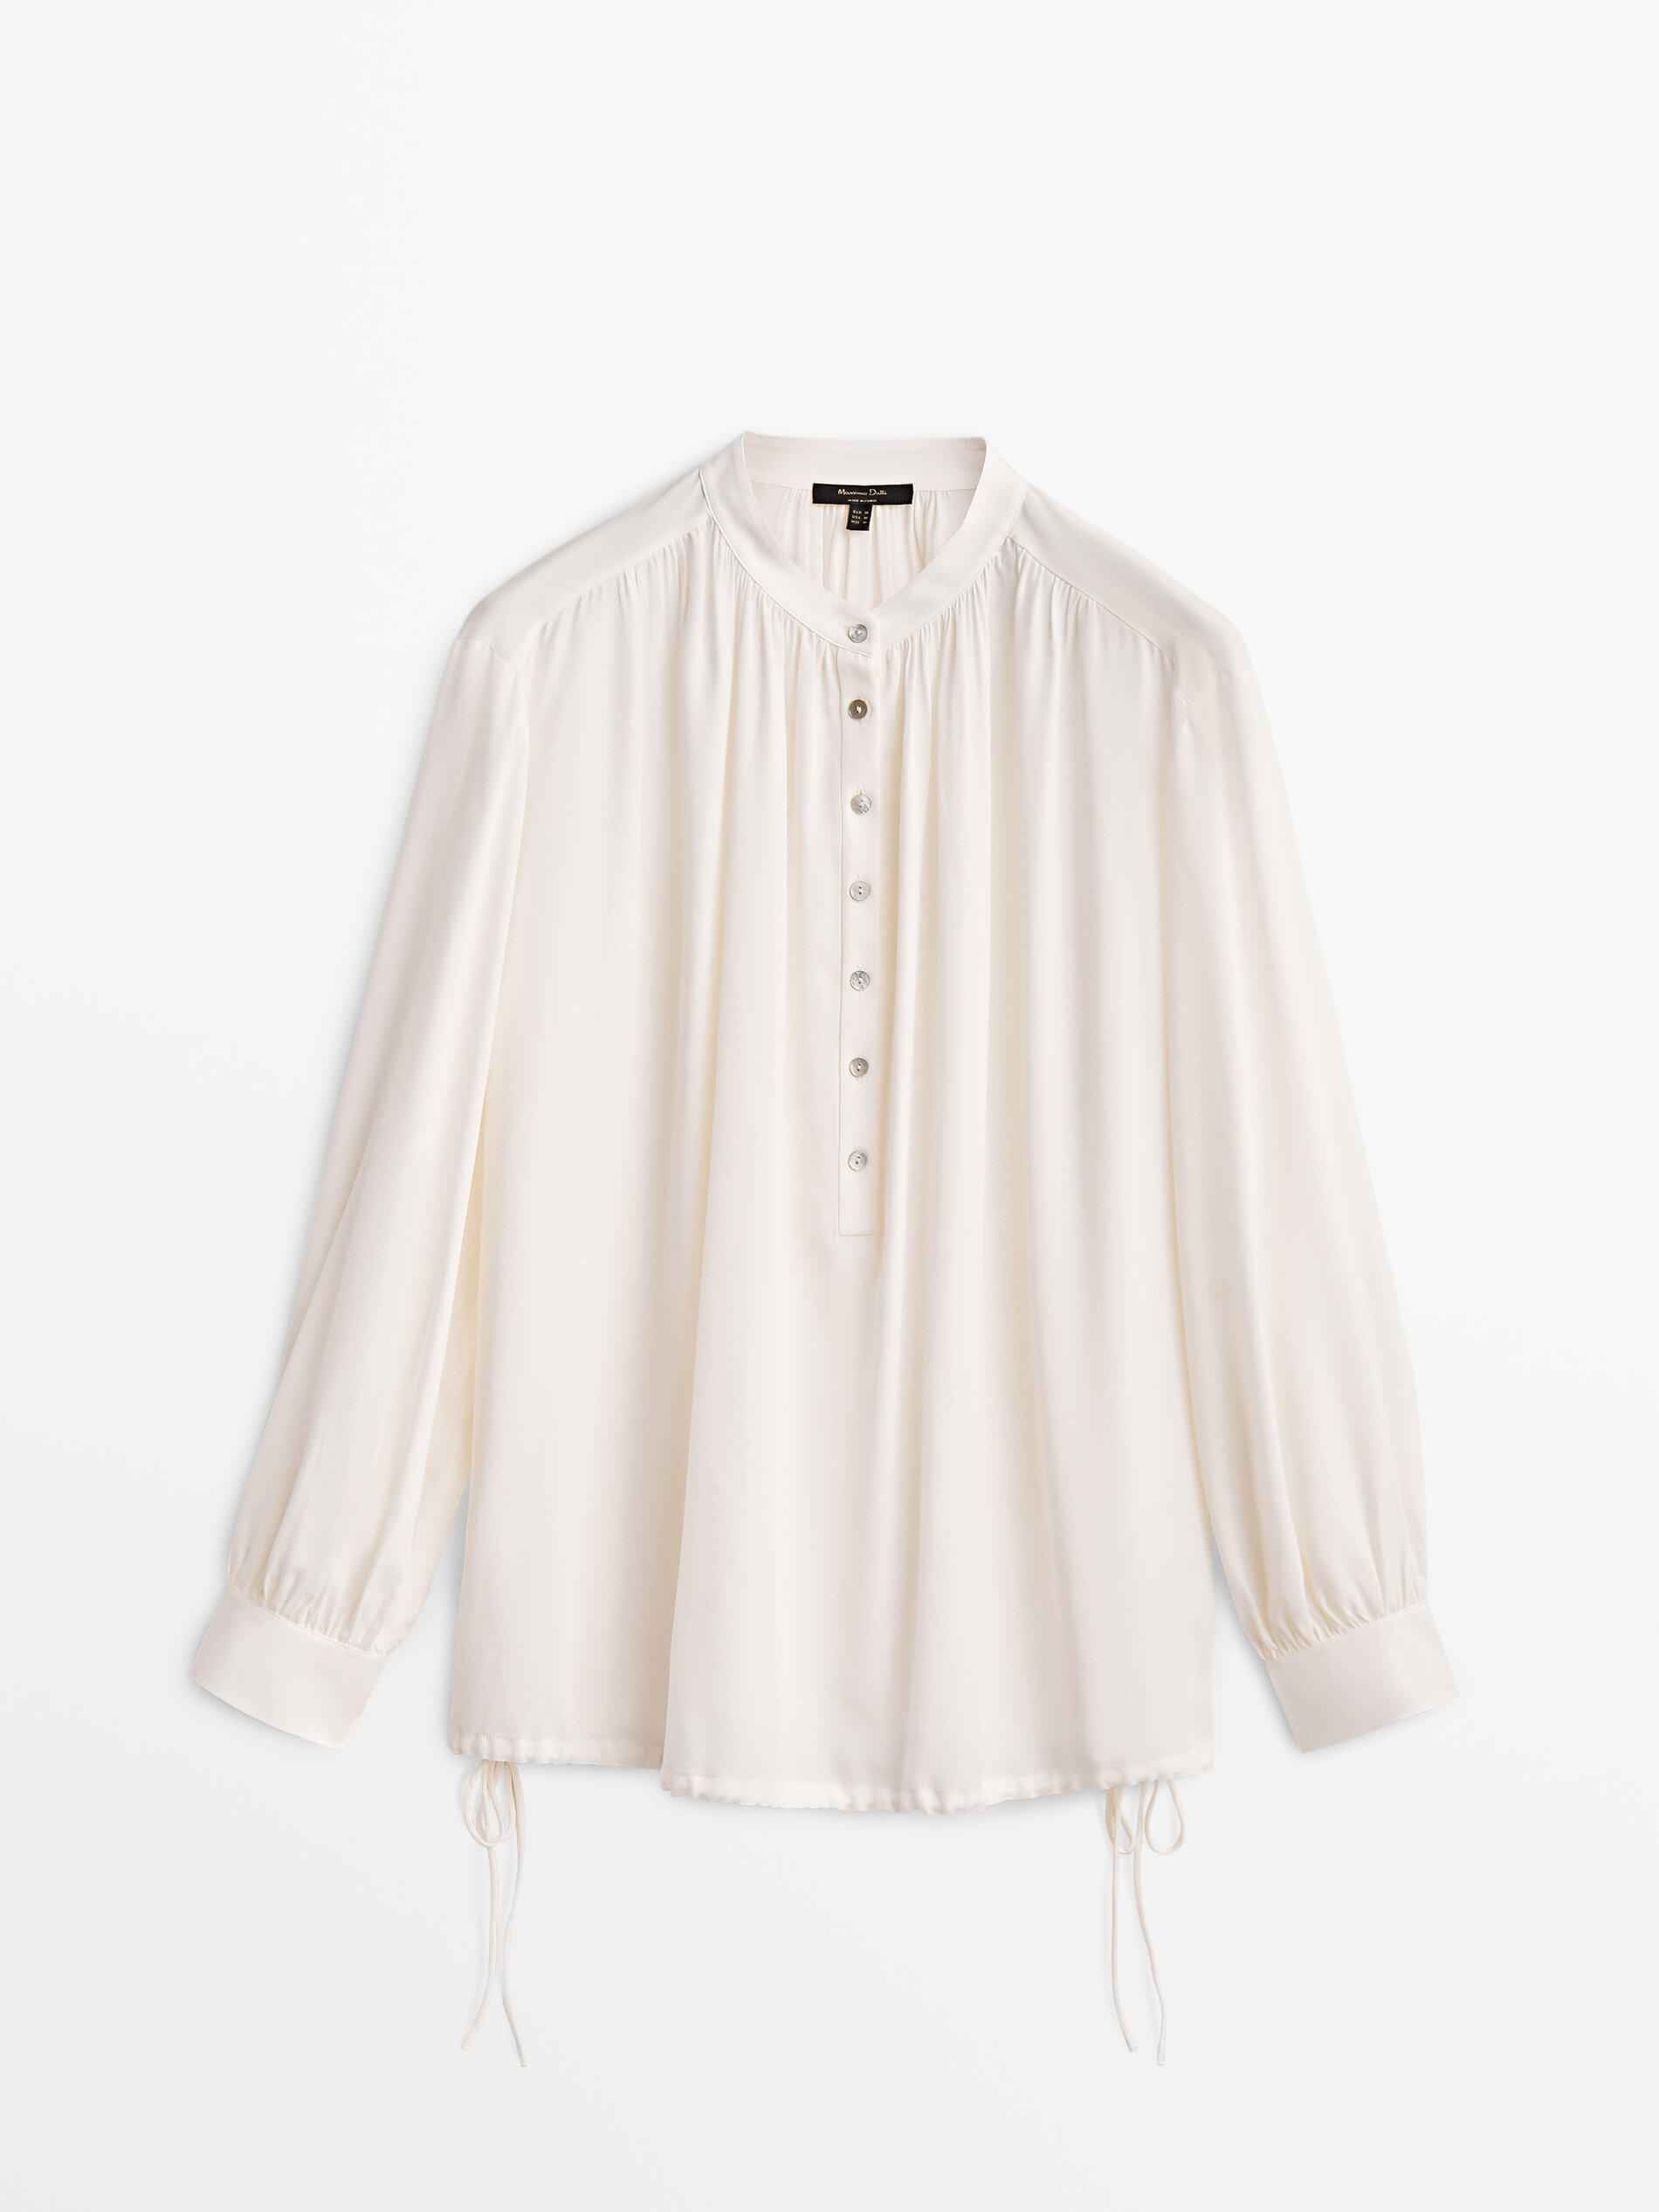 Massimo Dutti sweatshirt WOMEN FASHION Jumpers & Sweatshirts Hoodie White M discount 63% 